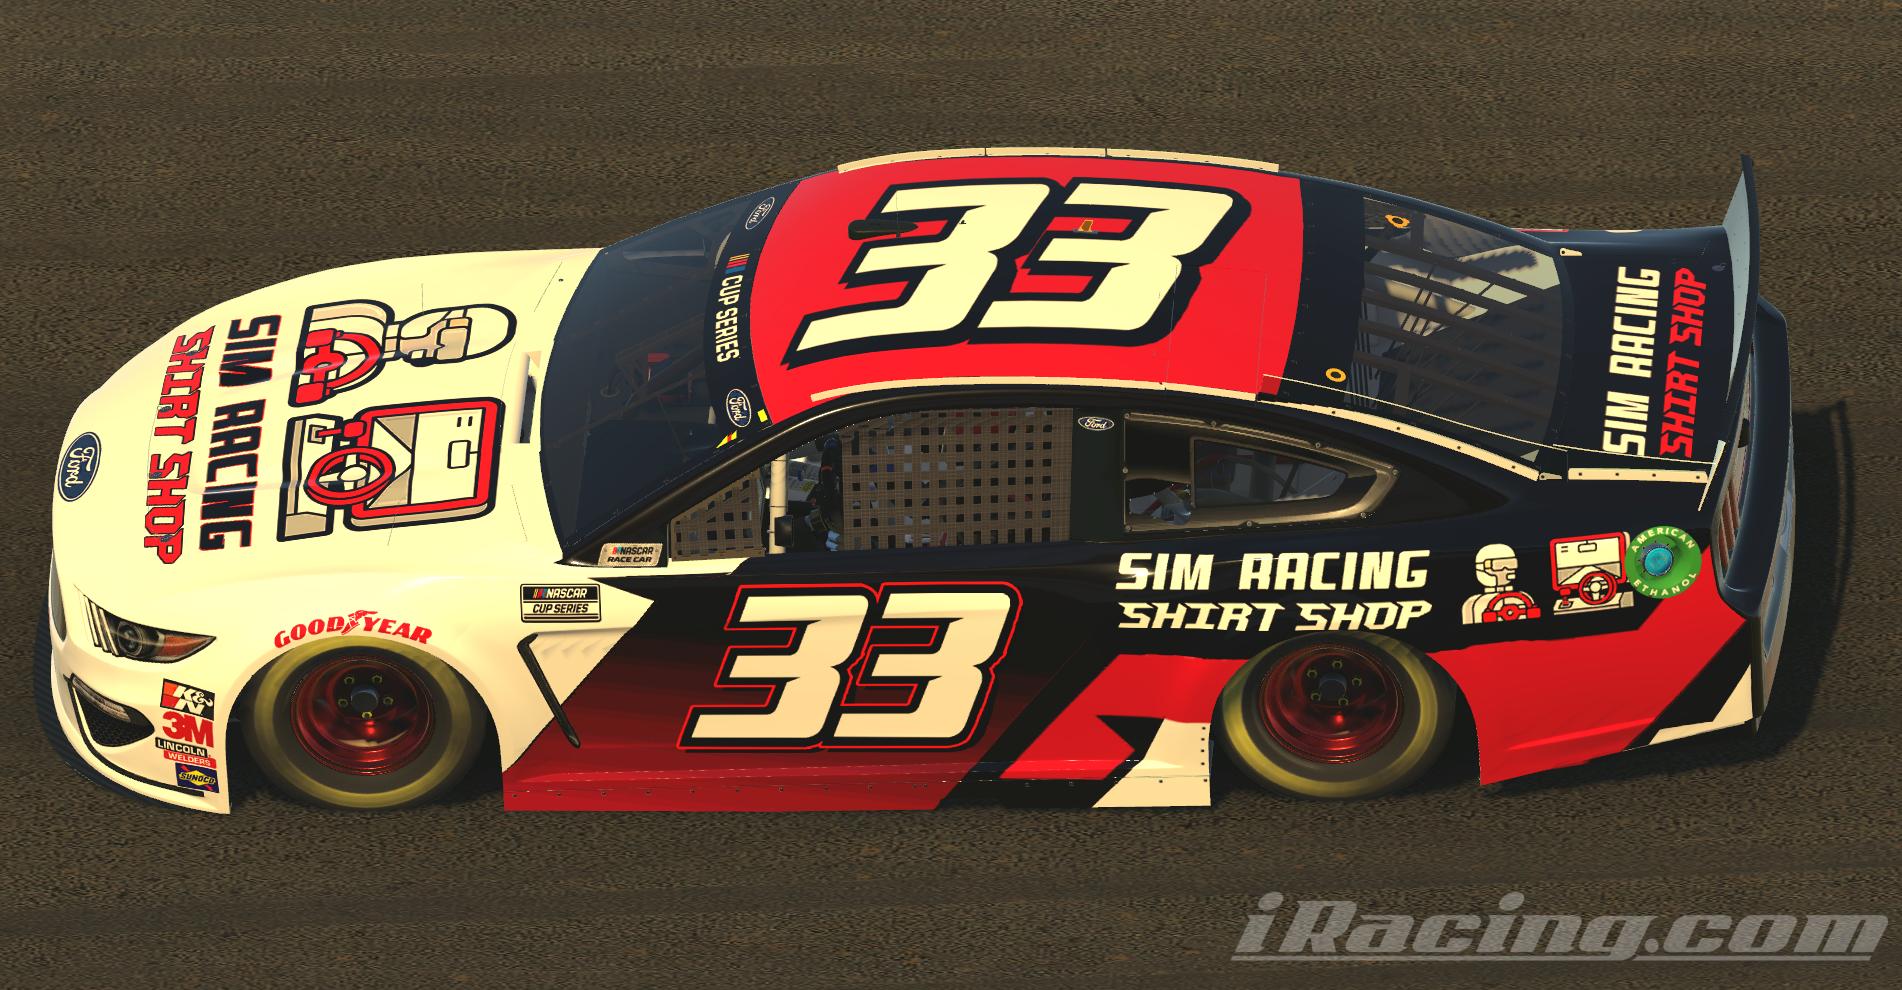 Preview of Sim Racing Shirt Shop Cup Car (No #) by Chris T J.